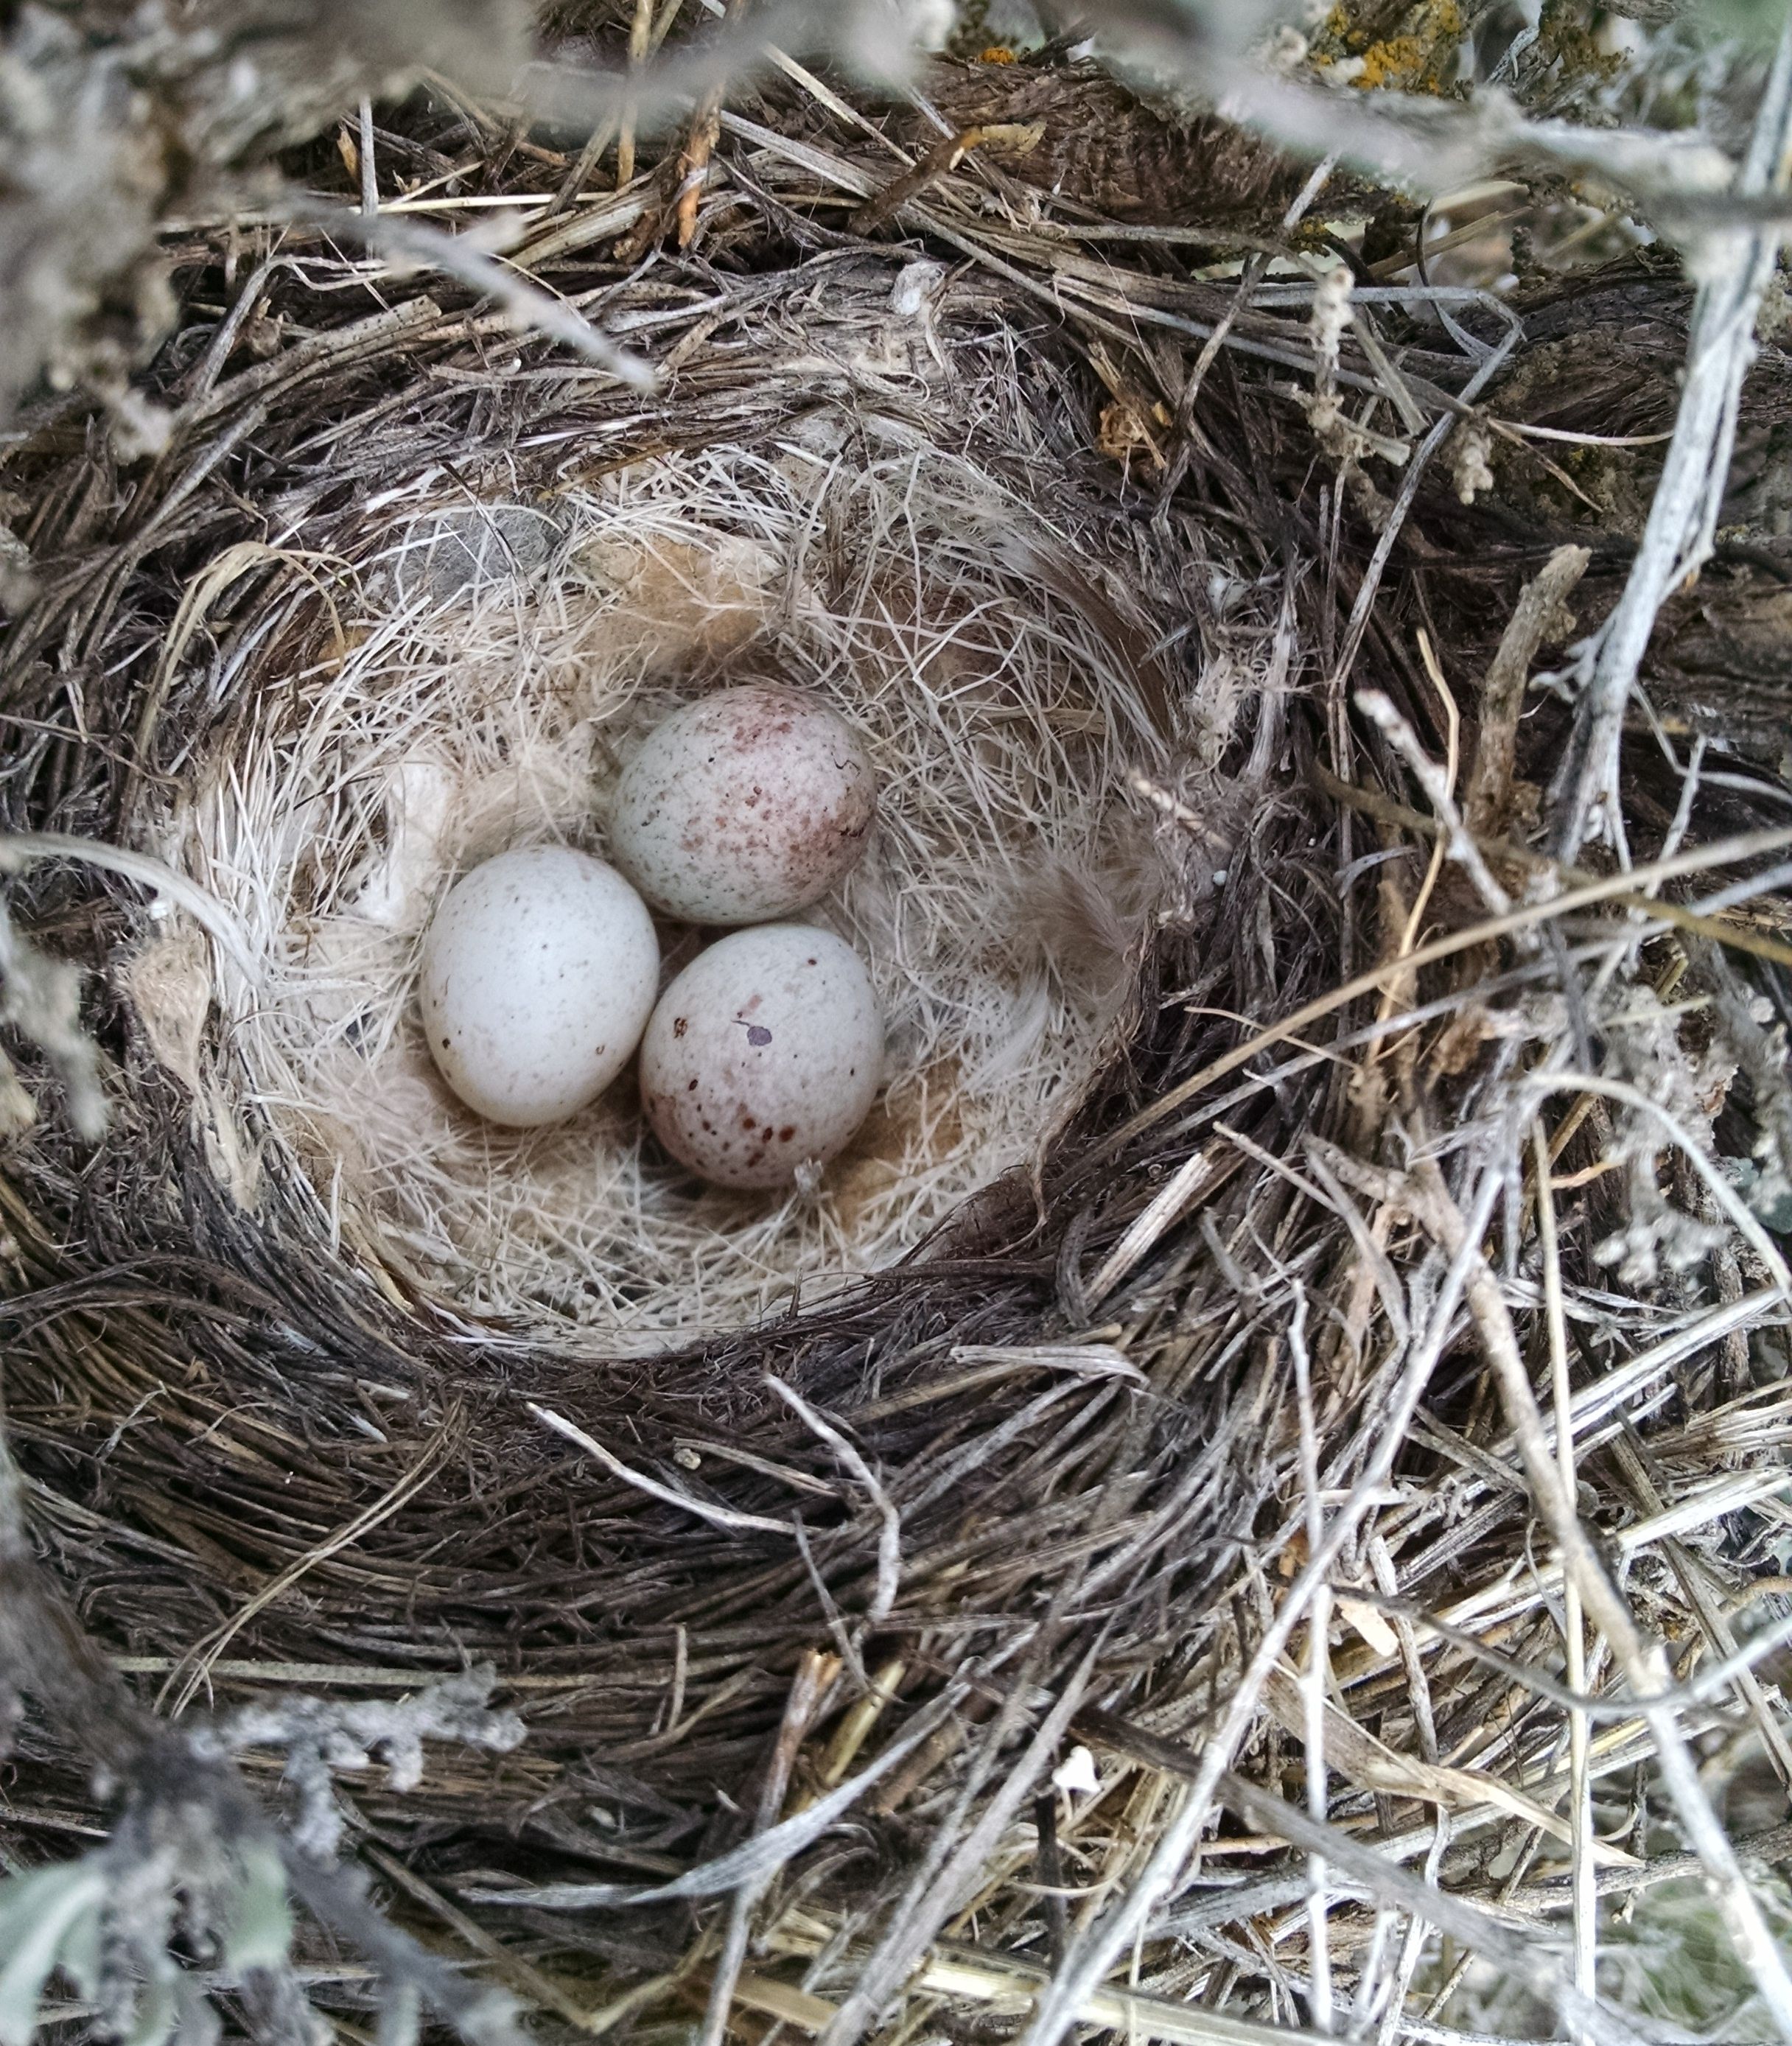 sagebrush sparrow nest